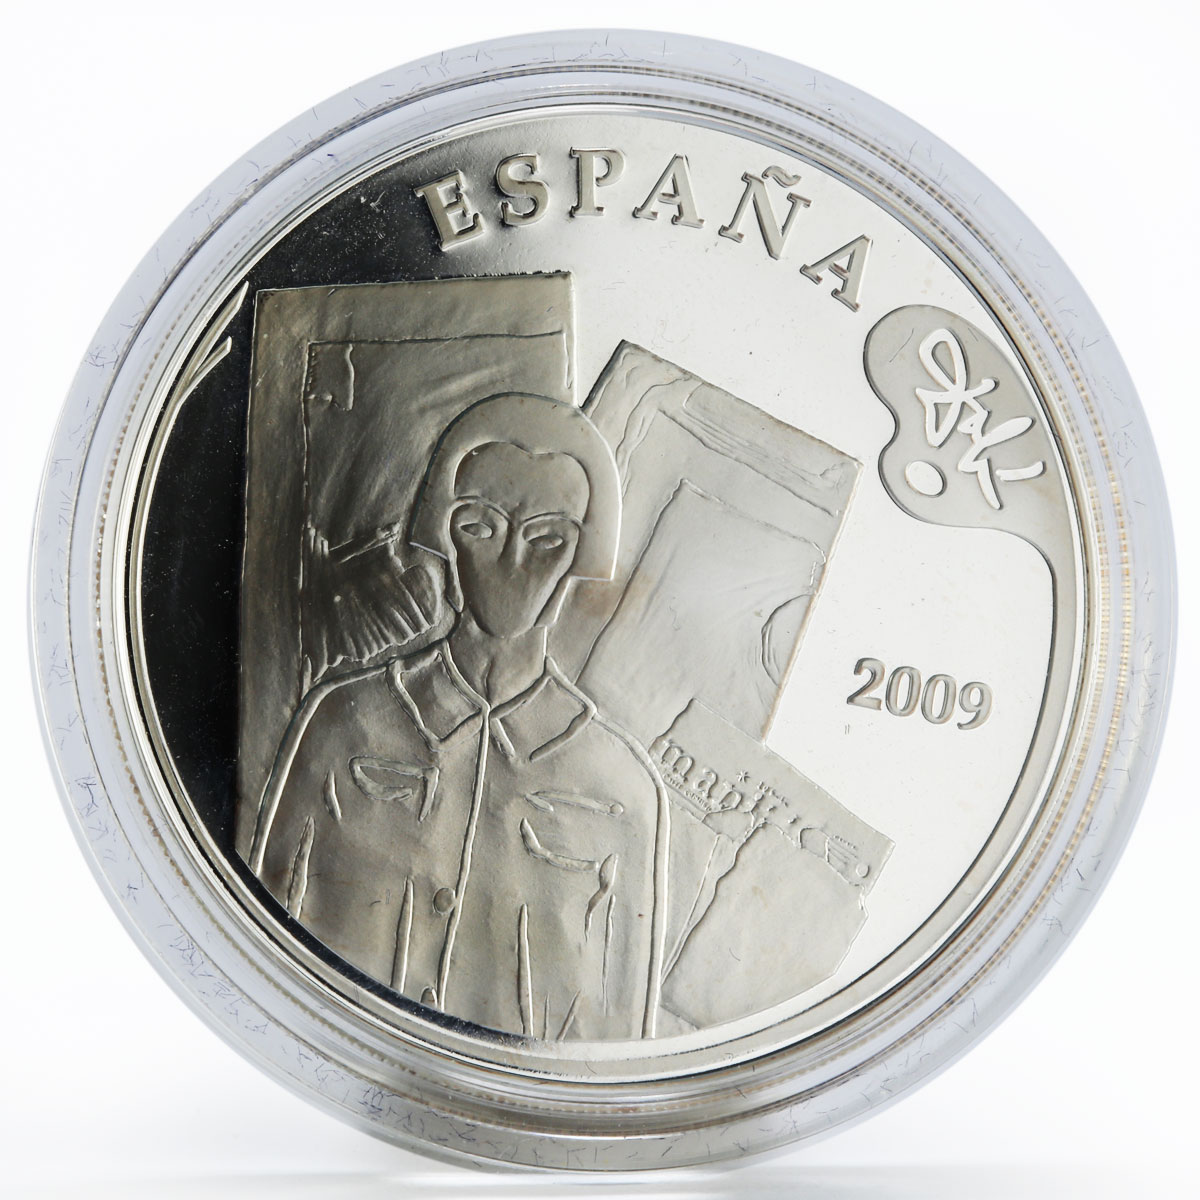 Spain 10 euro Salvador Dali Portrait of Picasso painter proof silver coin 2009